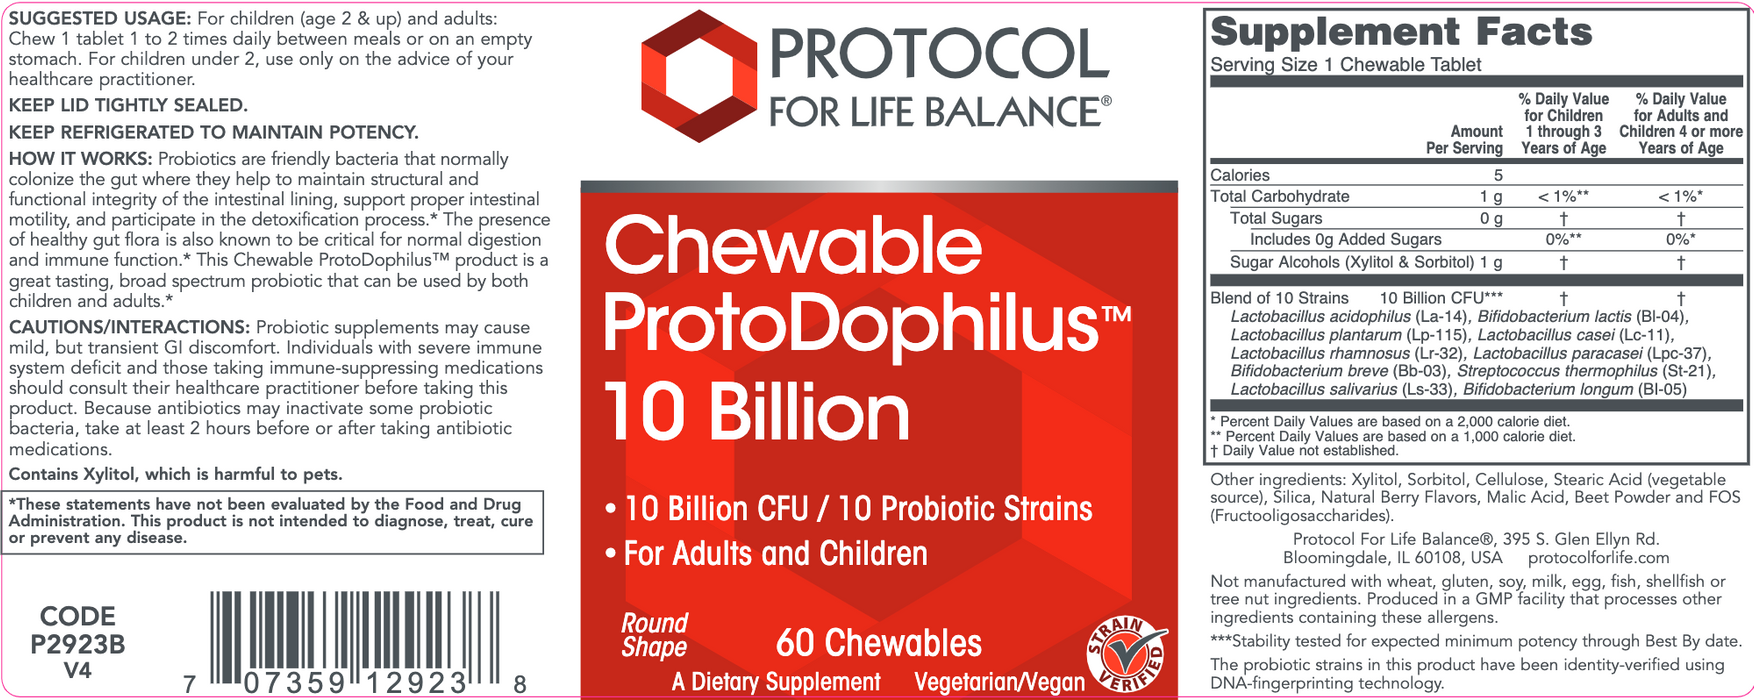 Chewable Protodophilus (60 Liquid Ounces)-Vitamins & Supplements-Protocol For Life Balance-Pine Street Clinic